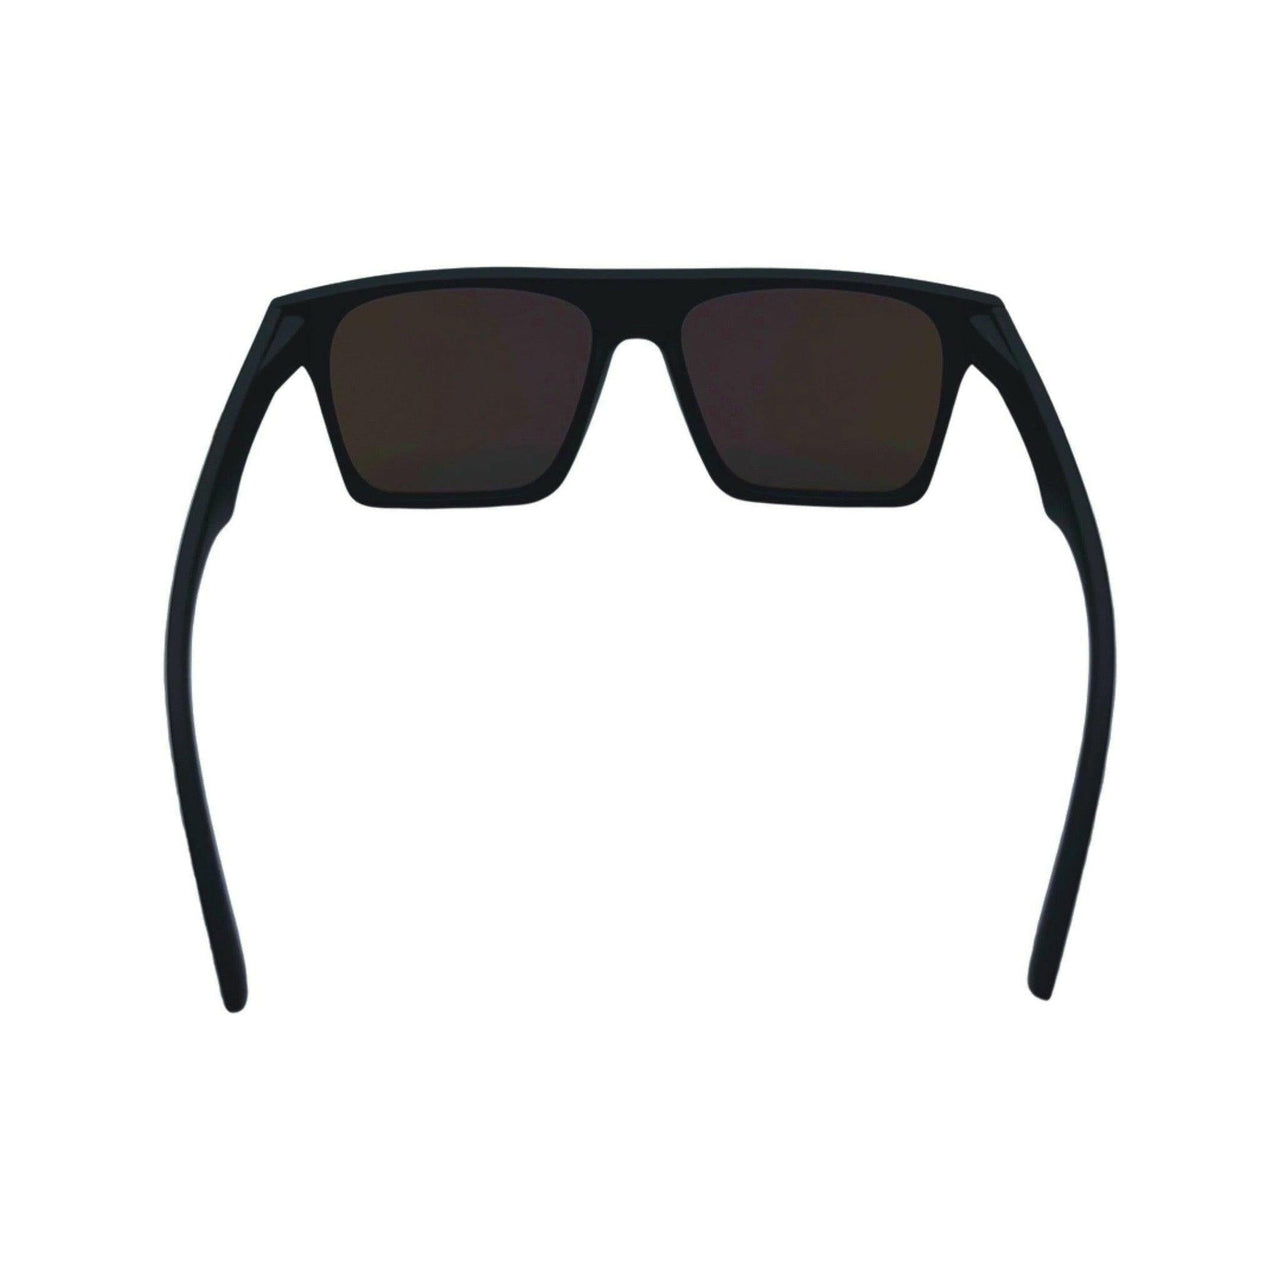 Green Party Shades Polarized Lens Sunglasses - Rebel Reaper Clothing Company Sunglasses